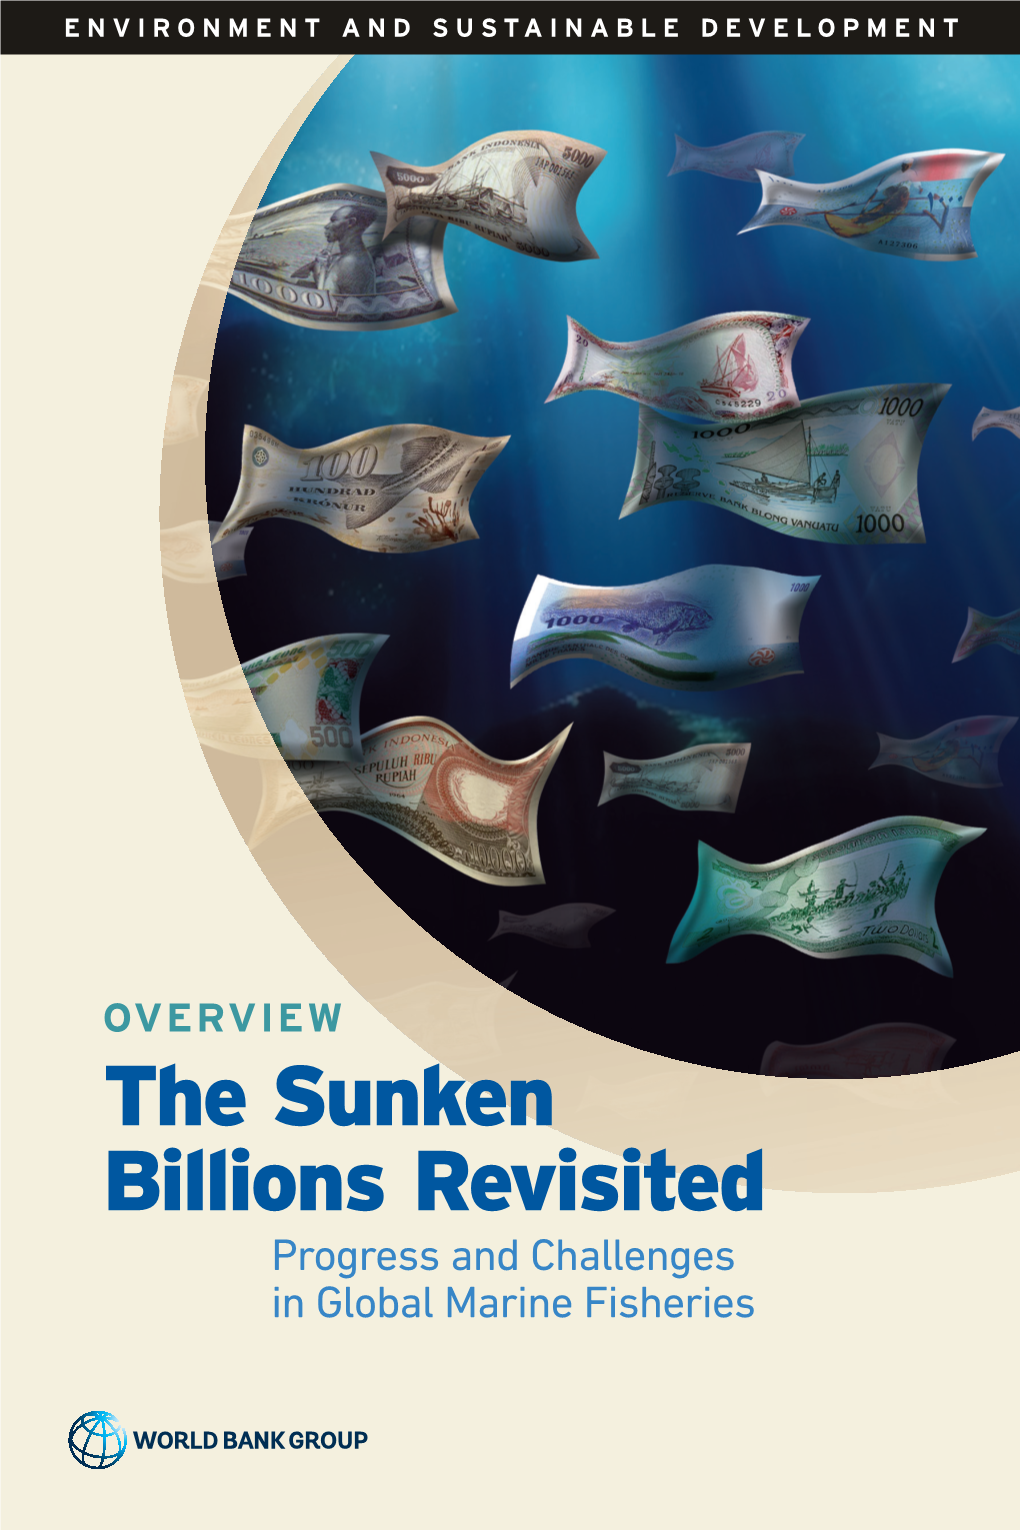 Sunken Billions Revisited Progress and Challenges in Global Marine Fisheries